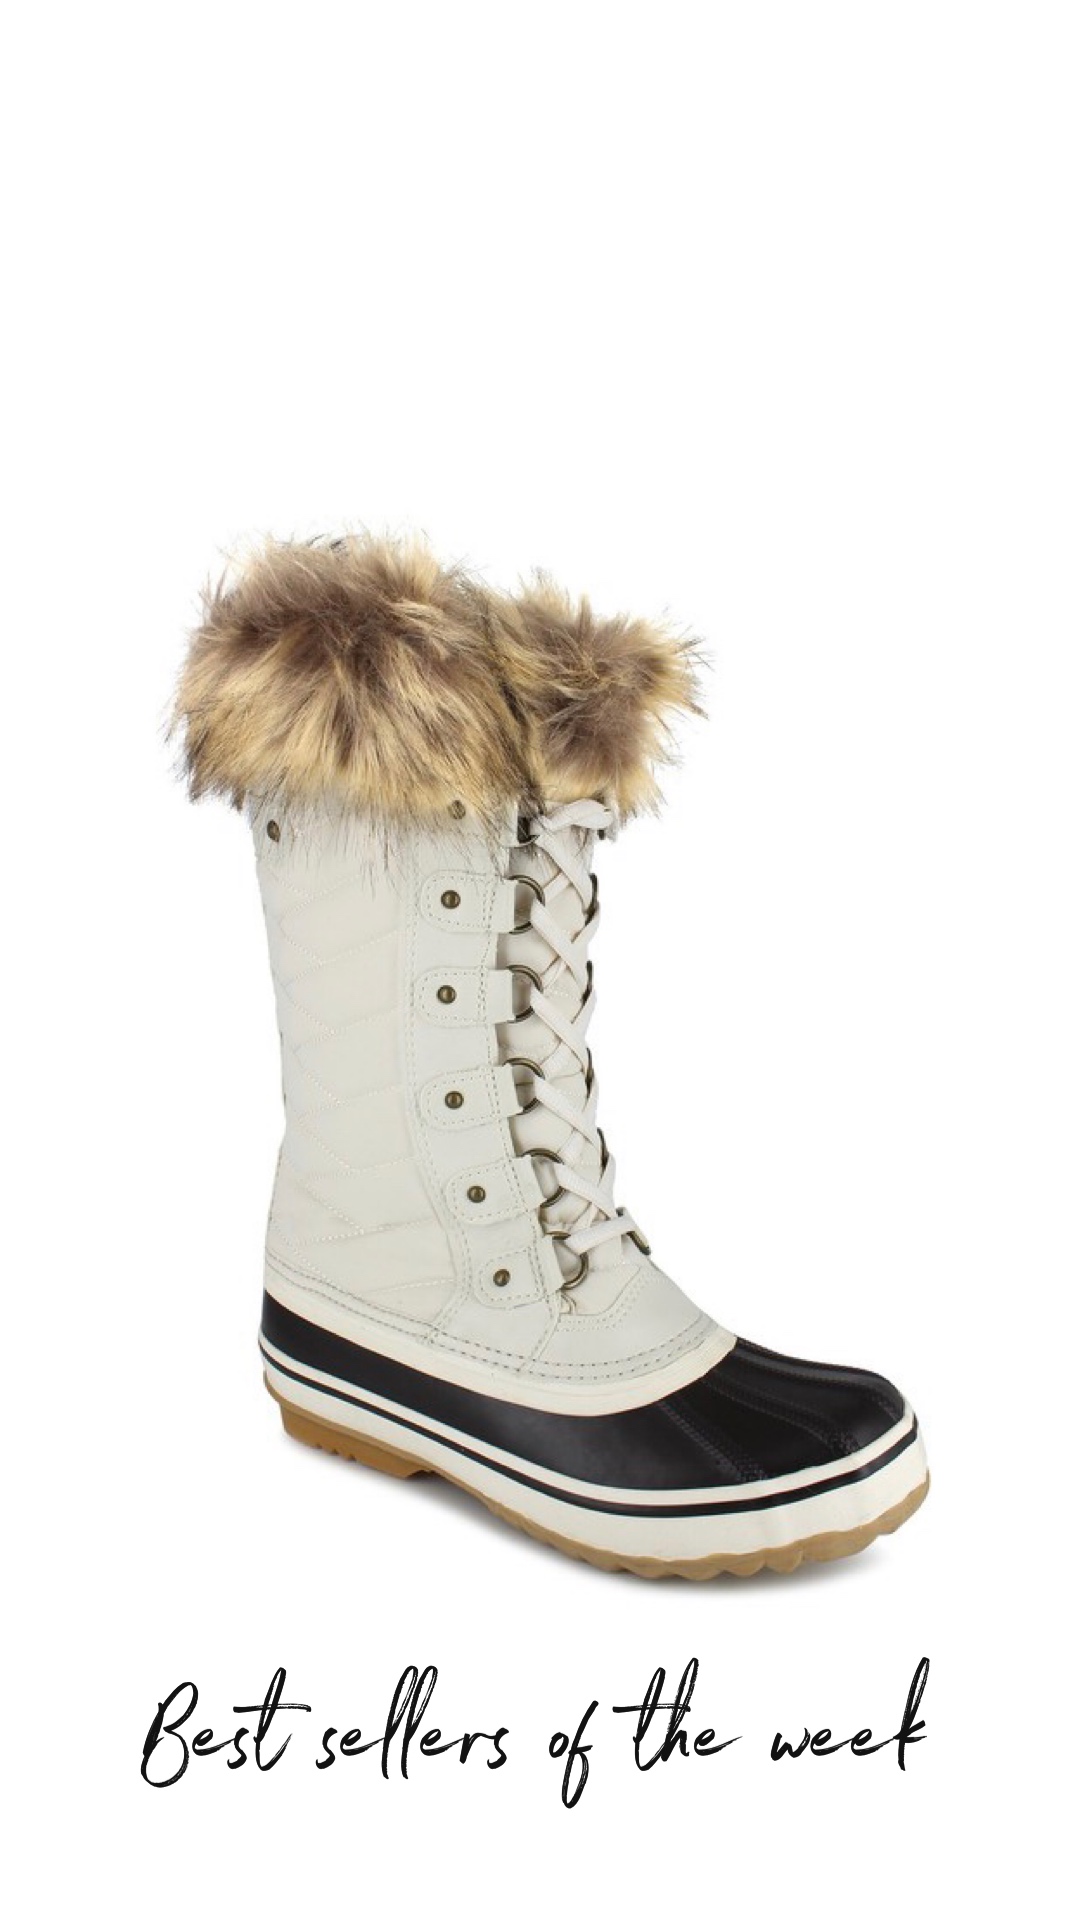 Walmart finds, Walmart style, winter boots under $50c funding beauty mom style